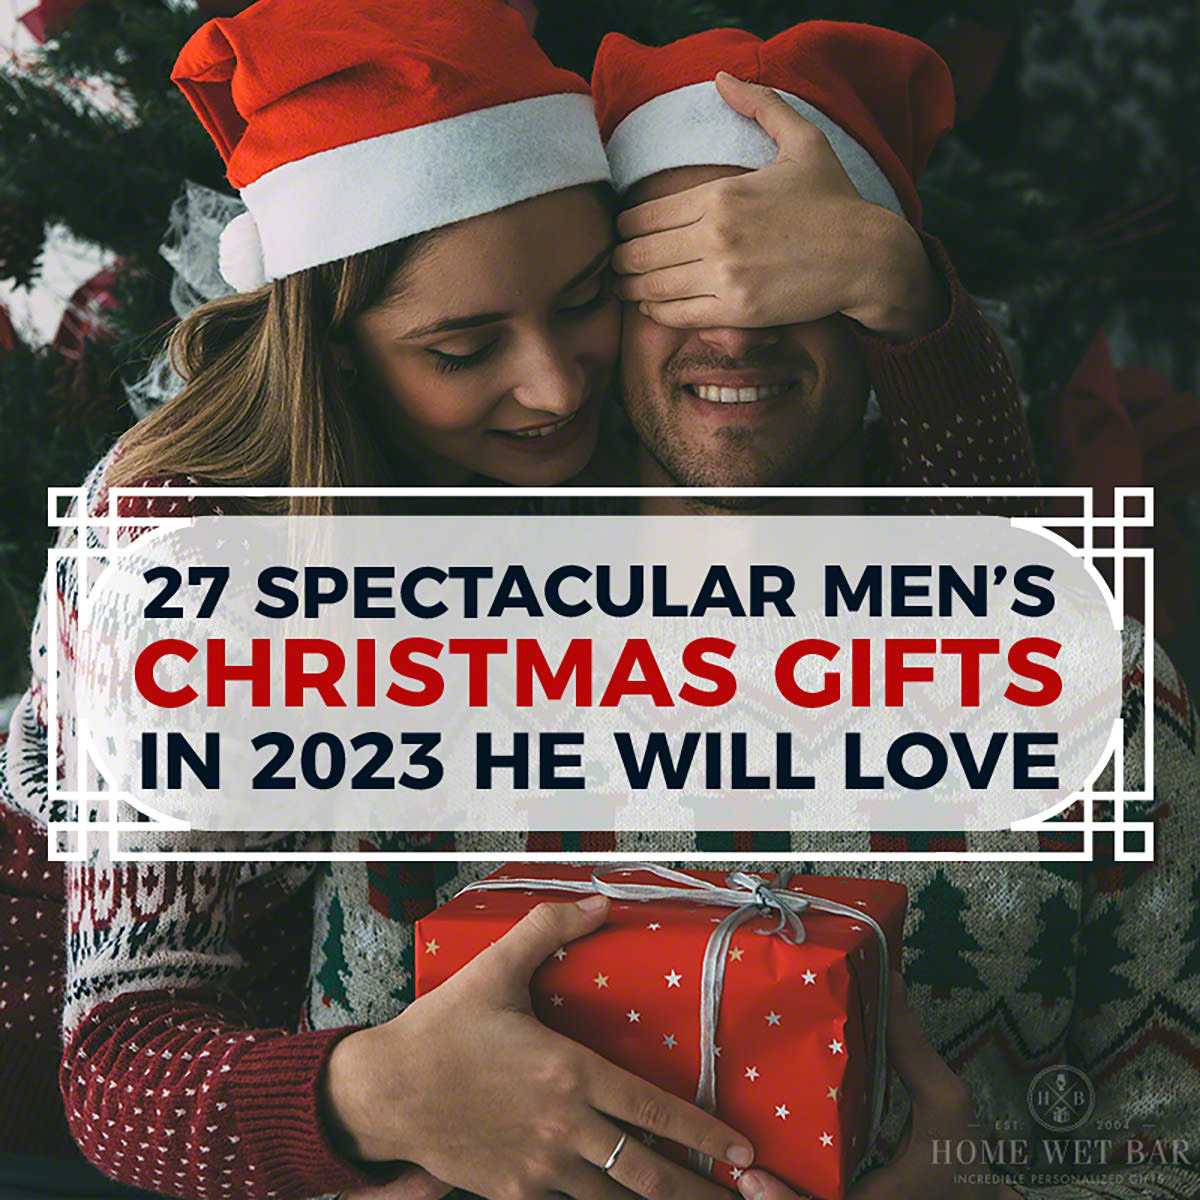 https://www.homewetbar.com/blog/wp-content/uploads/2019/09/27-spectacular-mens-christmas-gifts-in-2023-he-will-love.jpg